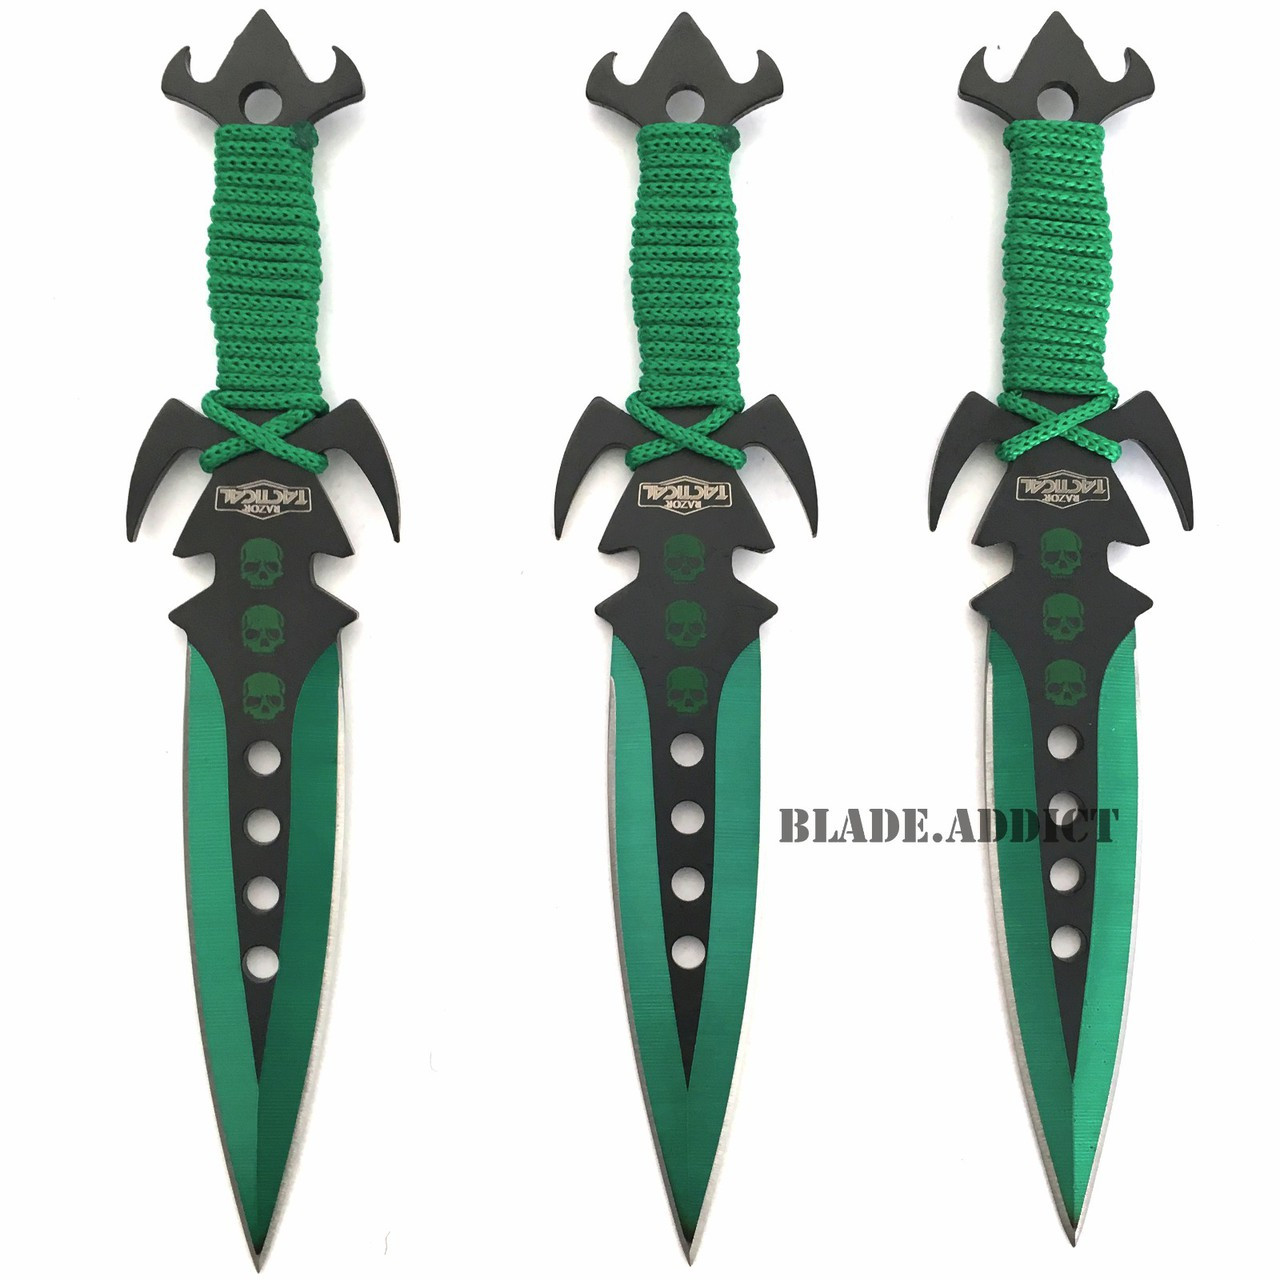 12 Pc 6 Ninja Tactical Combat Kunai Throwing Knife w/ Sheath Hunting Set -  MEGAKNIFE